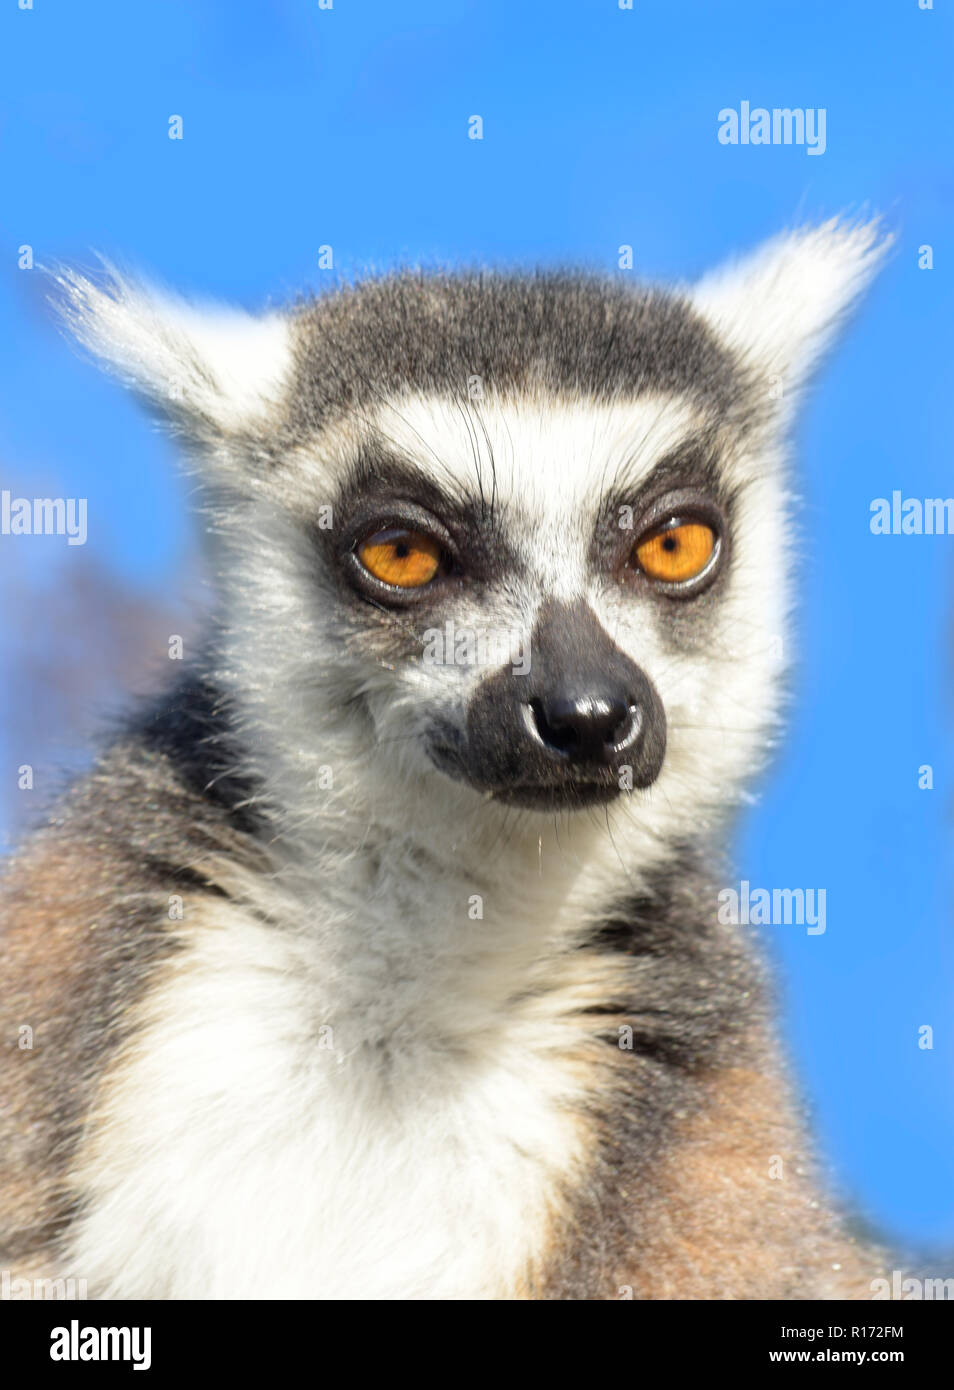 Close Up retrato de un Lémur de cola de anillo (Lemur catta) mirando a la cámara Foto de stock